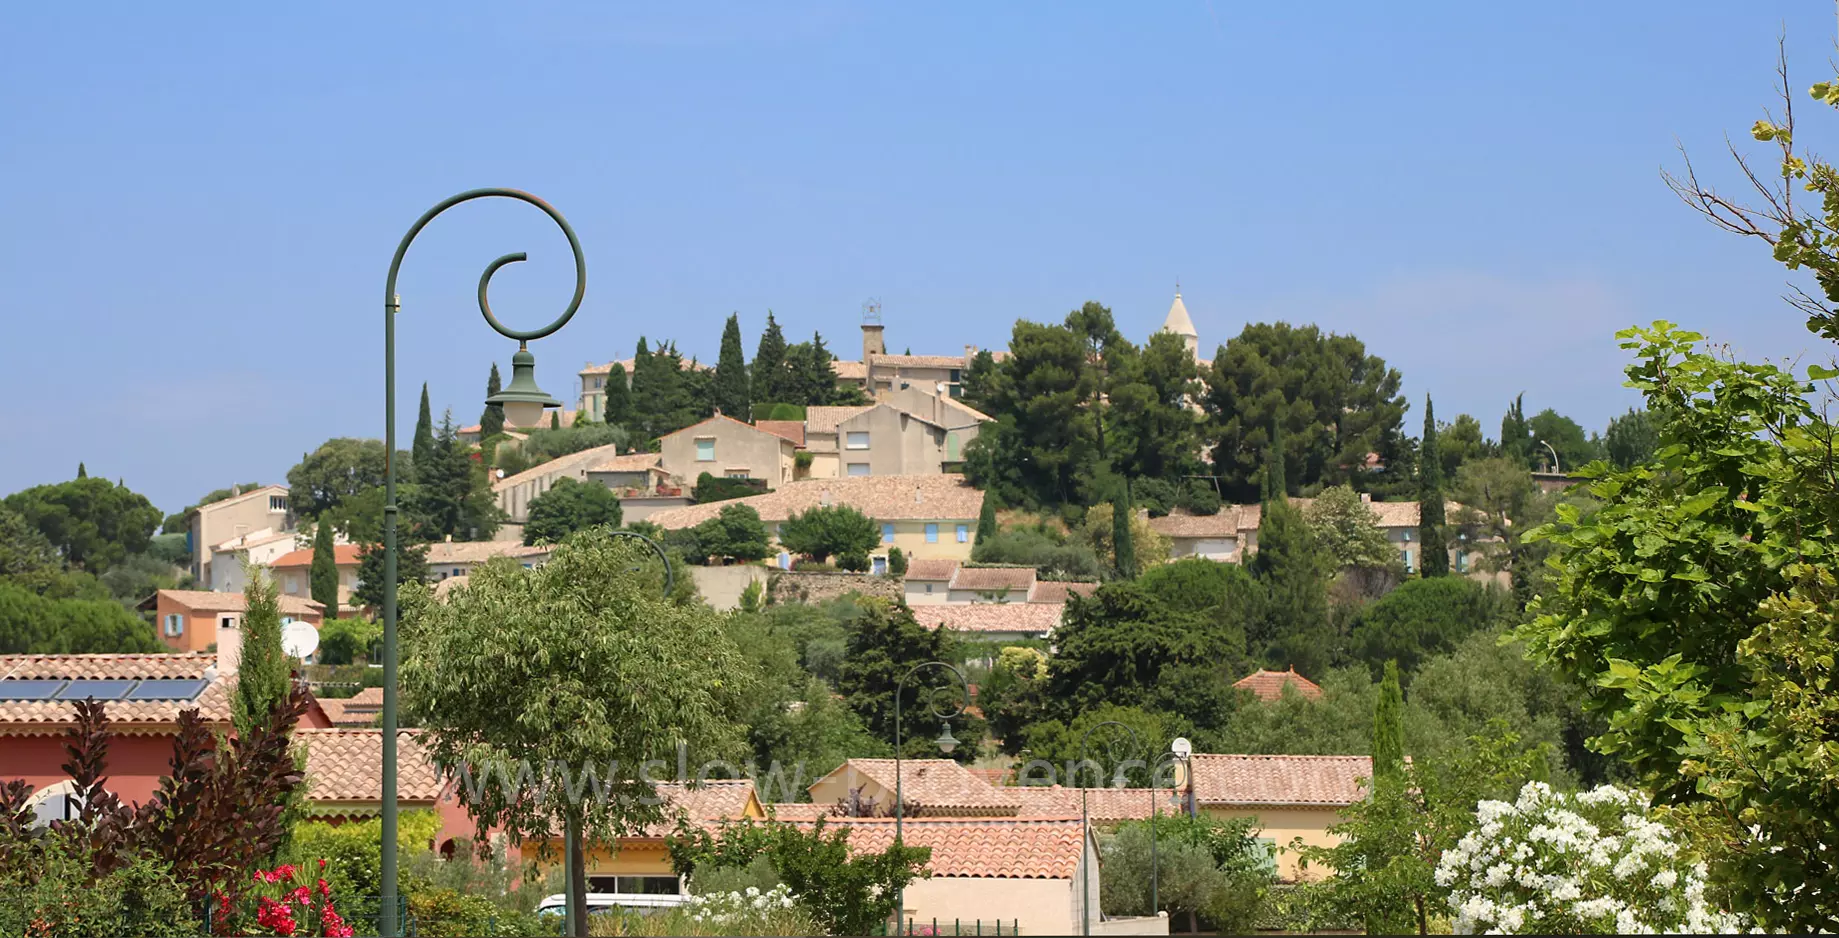 Cairanne, provençal village and Côte du Rhône vintage wine